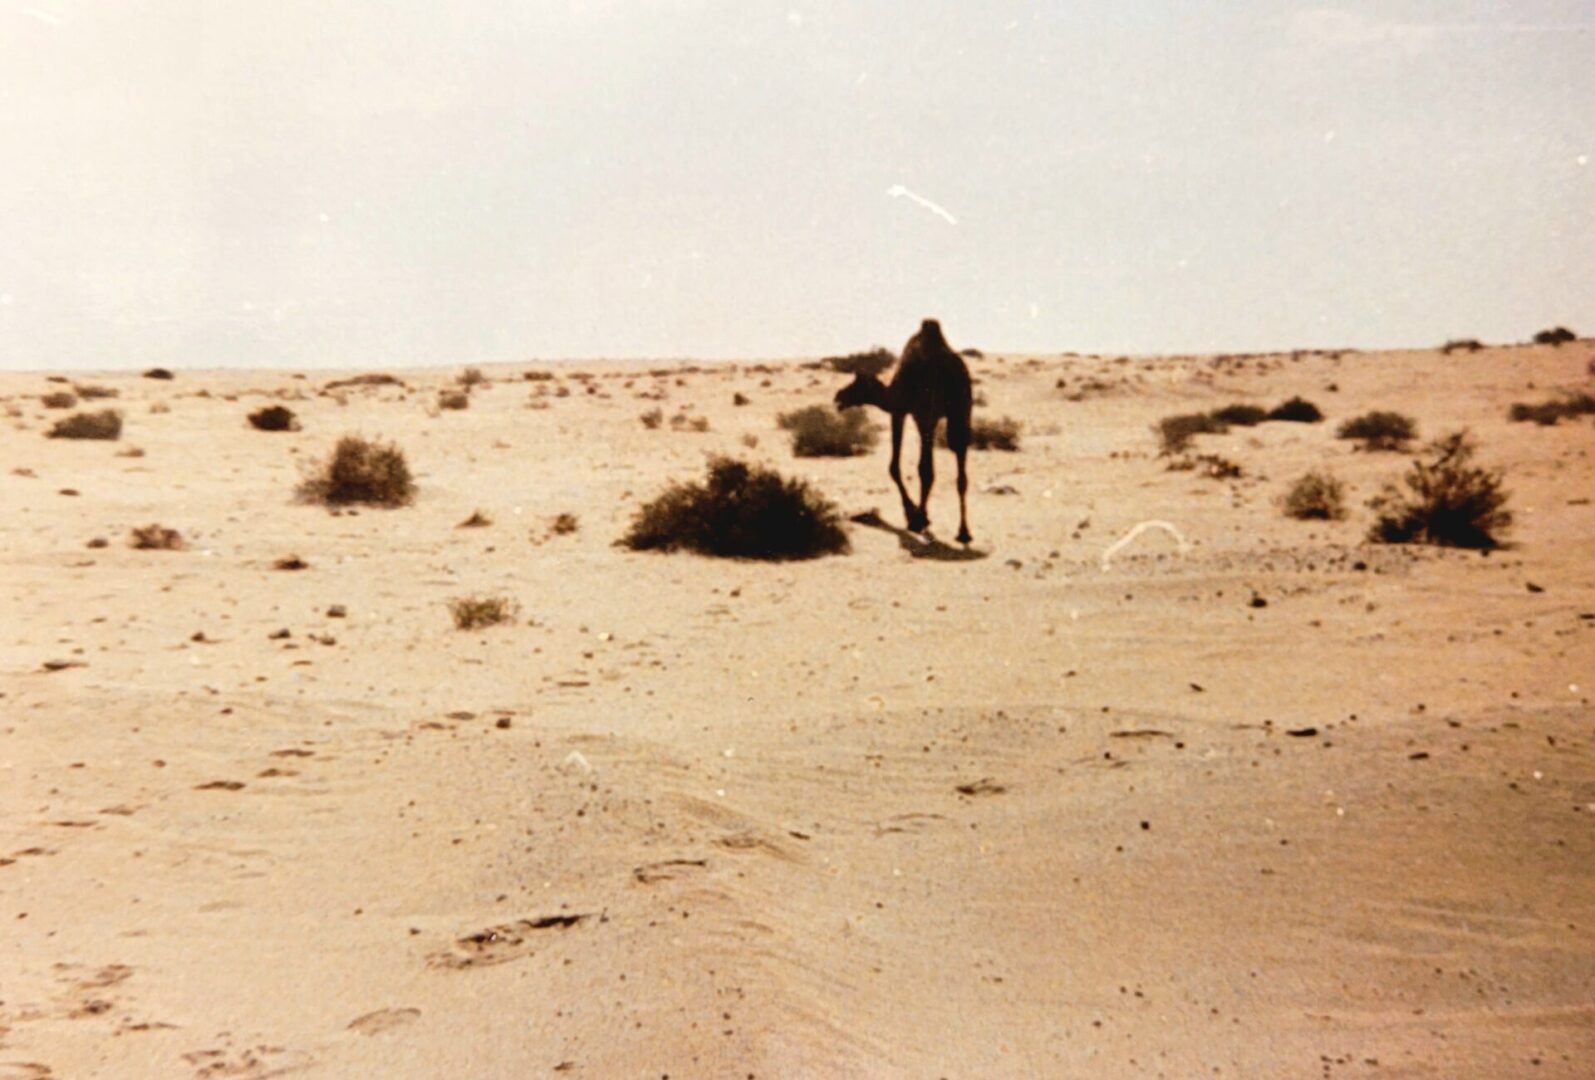 A camel in the Saudi desert